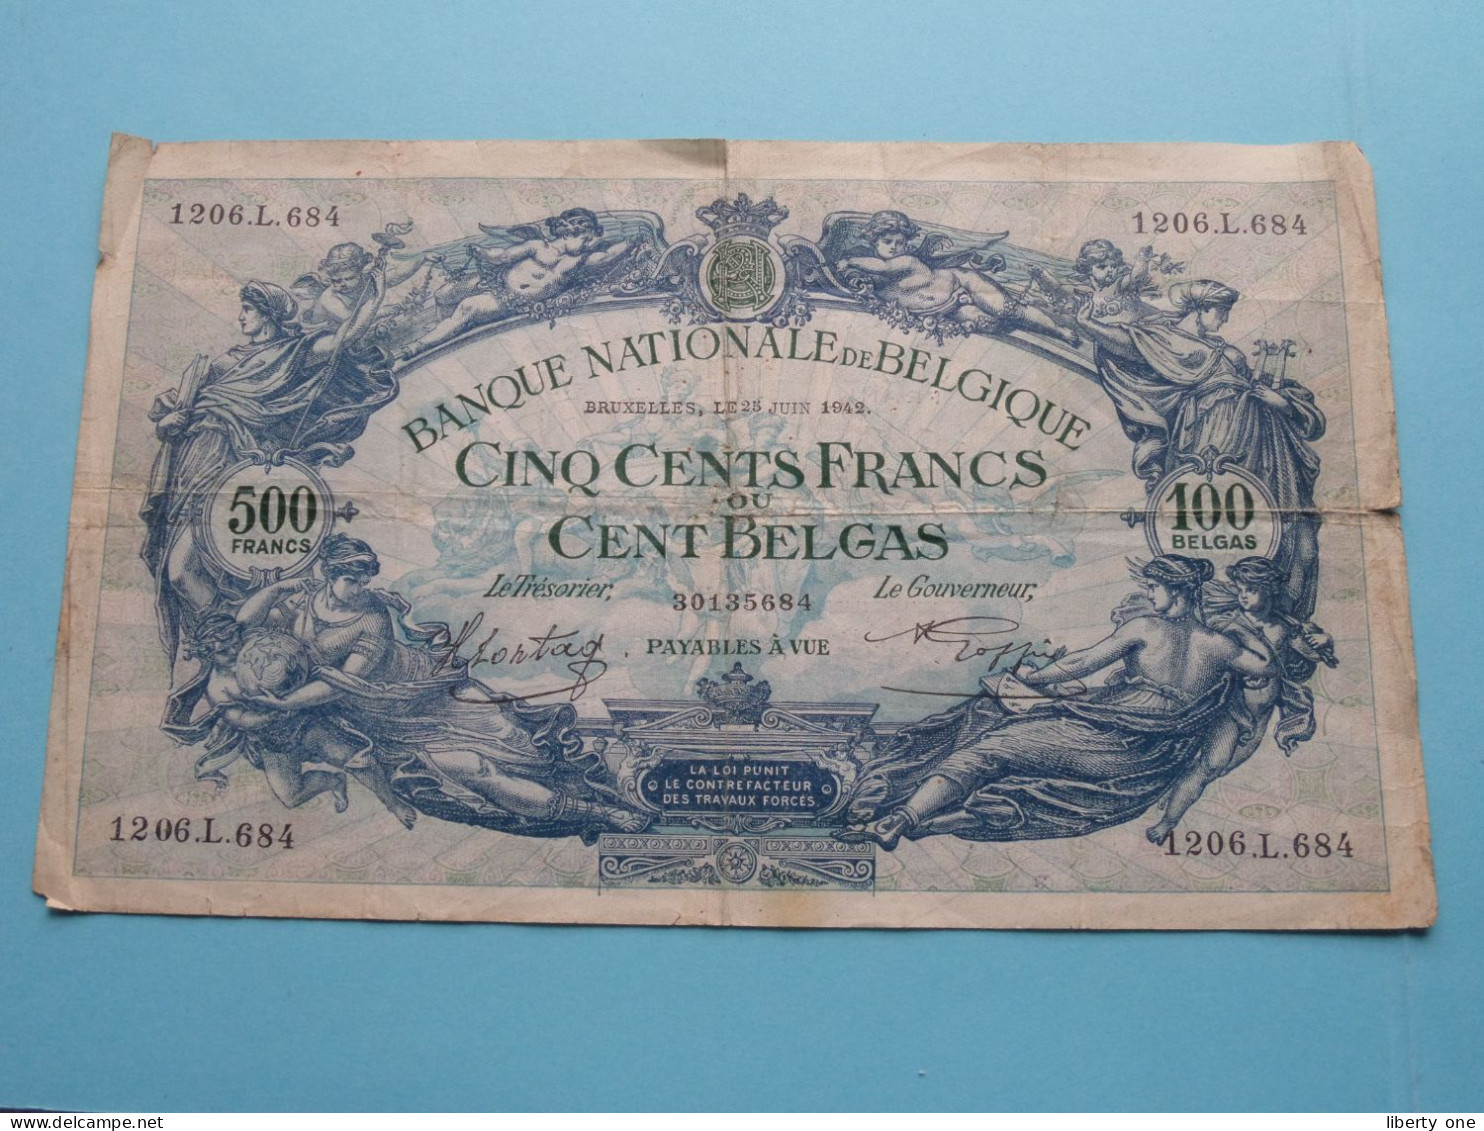 500 Cent Francs / 100 Belgas 1206.L.684/30135684 > 25 Juin 1942 ( Zie SCANS Voor Detail ) België / Belgique / Belgium ! - 500 Francos-100 Belgas